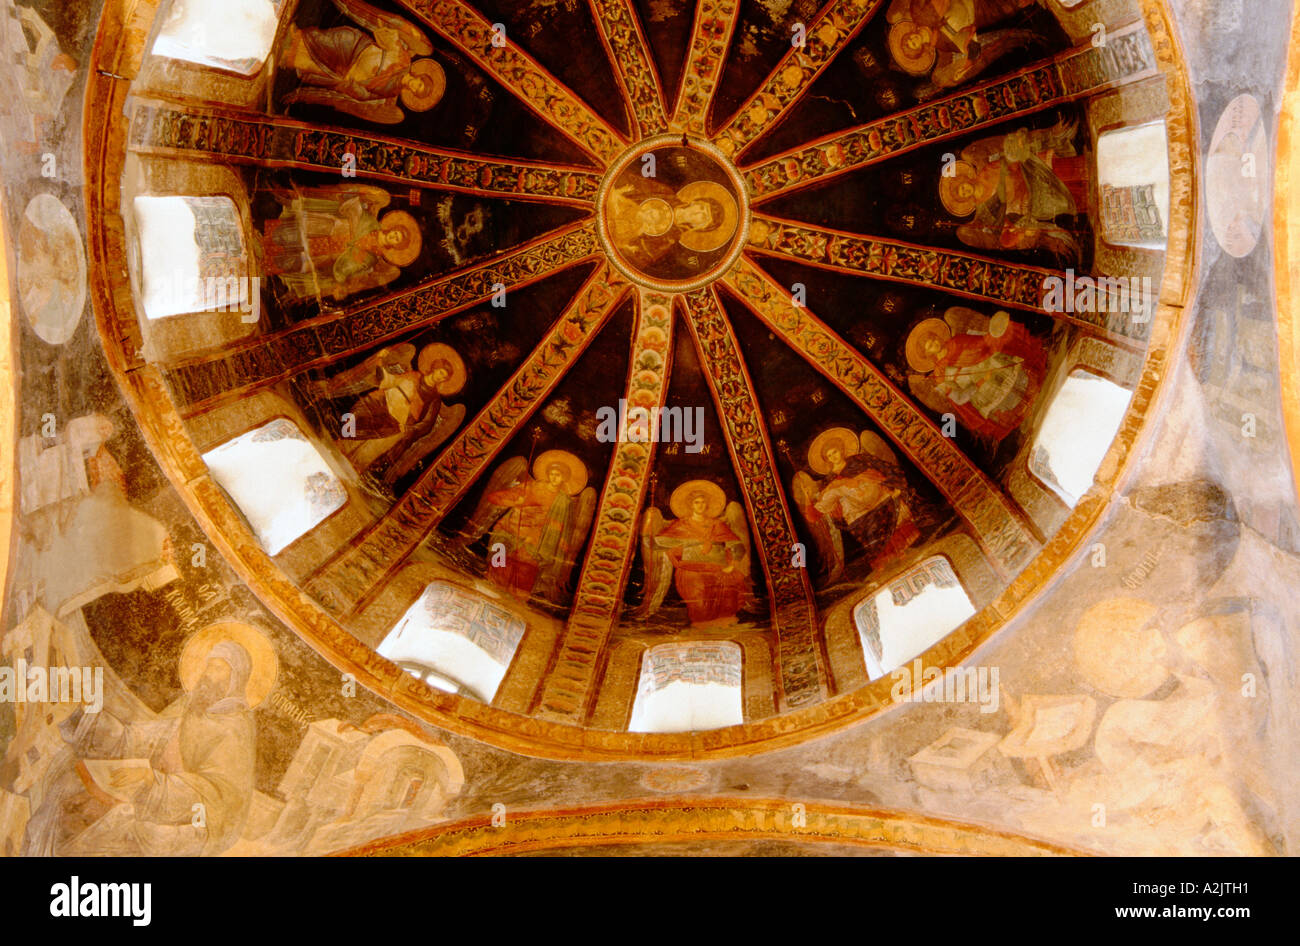 Turkey, Istanbul, Golden Horn, Chora Monastery. Original Byzantine frescos decorate the walls & domed ceiling. Stock Photo